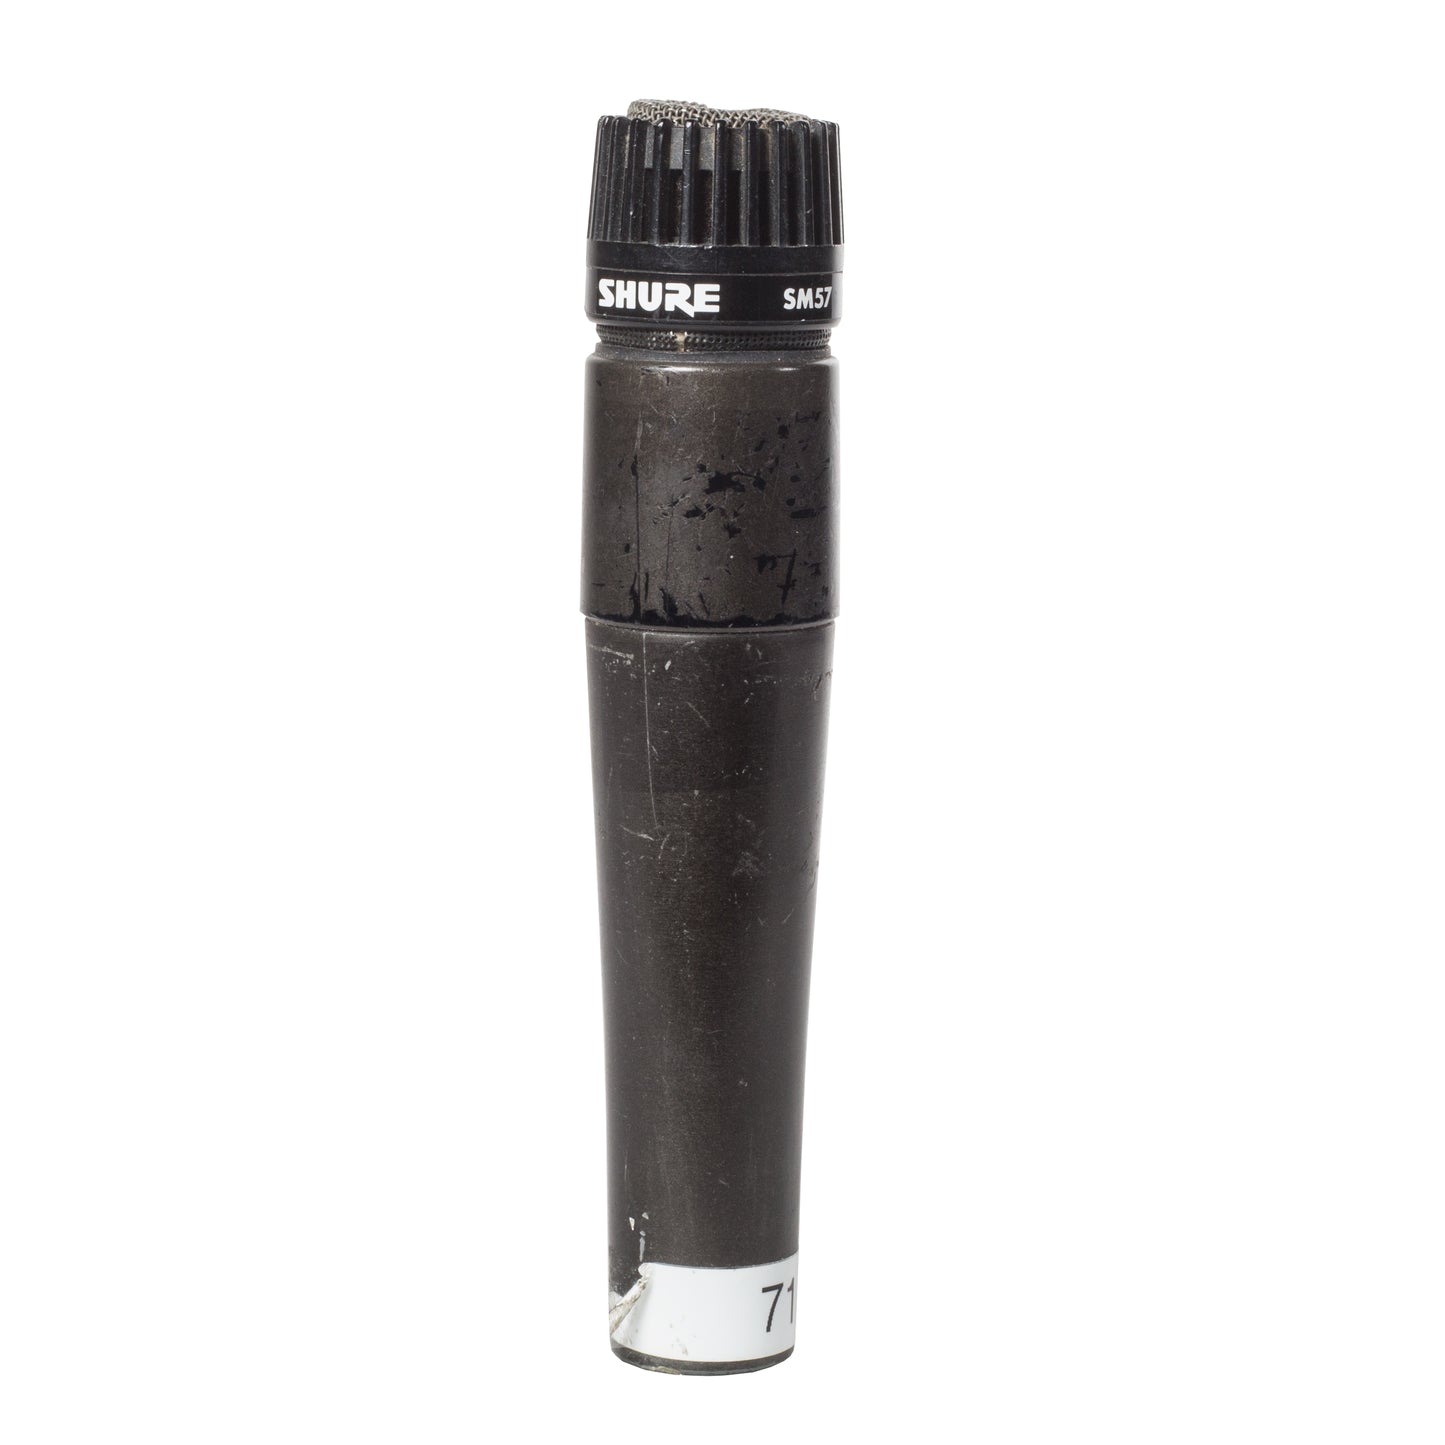 Shure SM57 Dynamic Cardioid Microphone